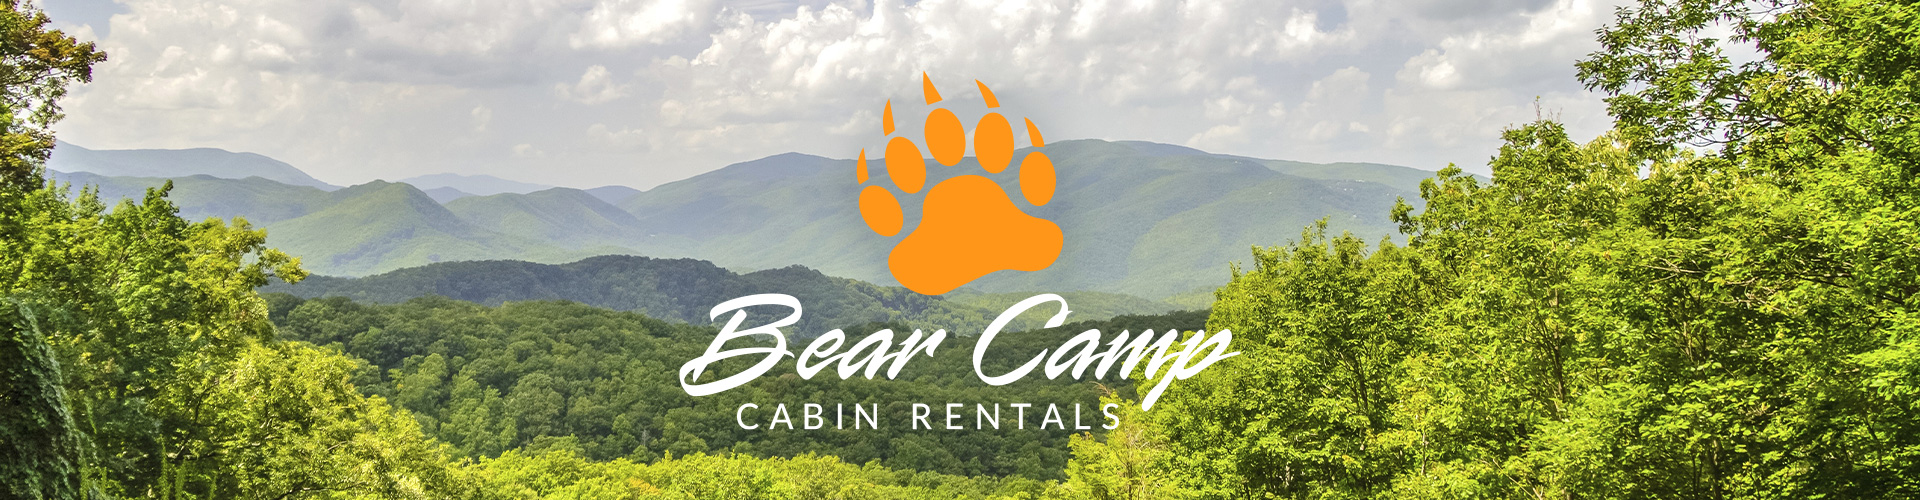 Bear Camp Cabin Rentals Banner